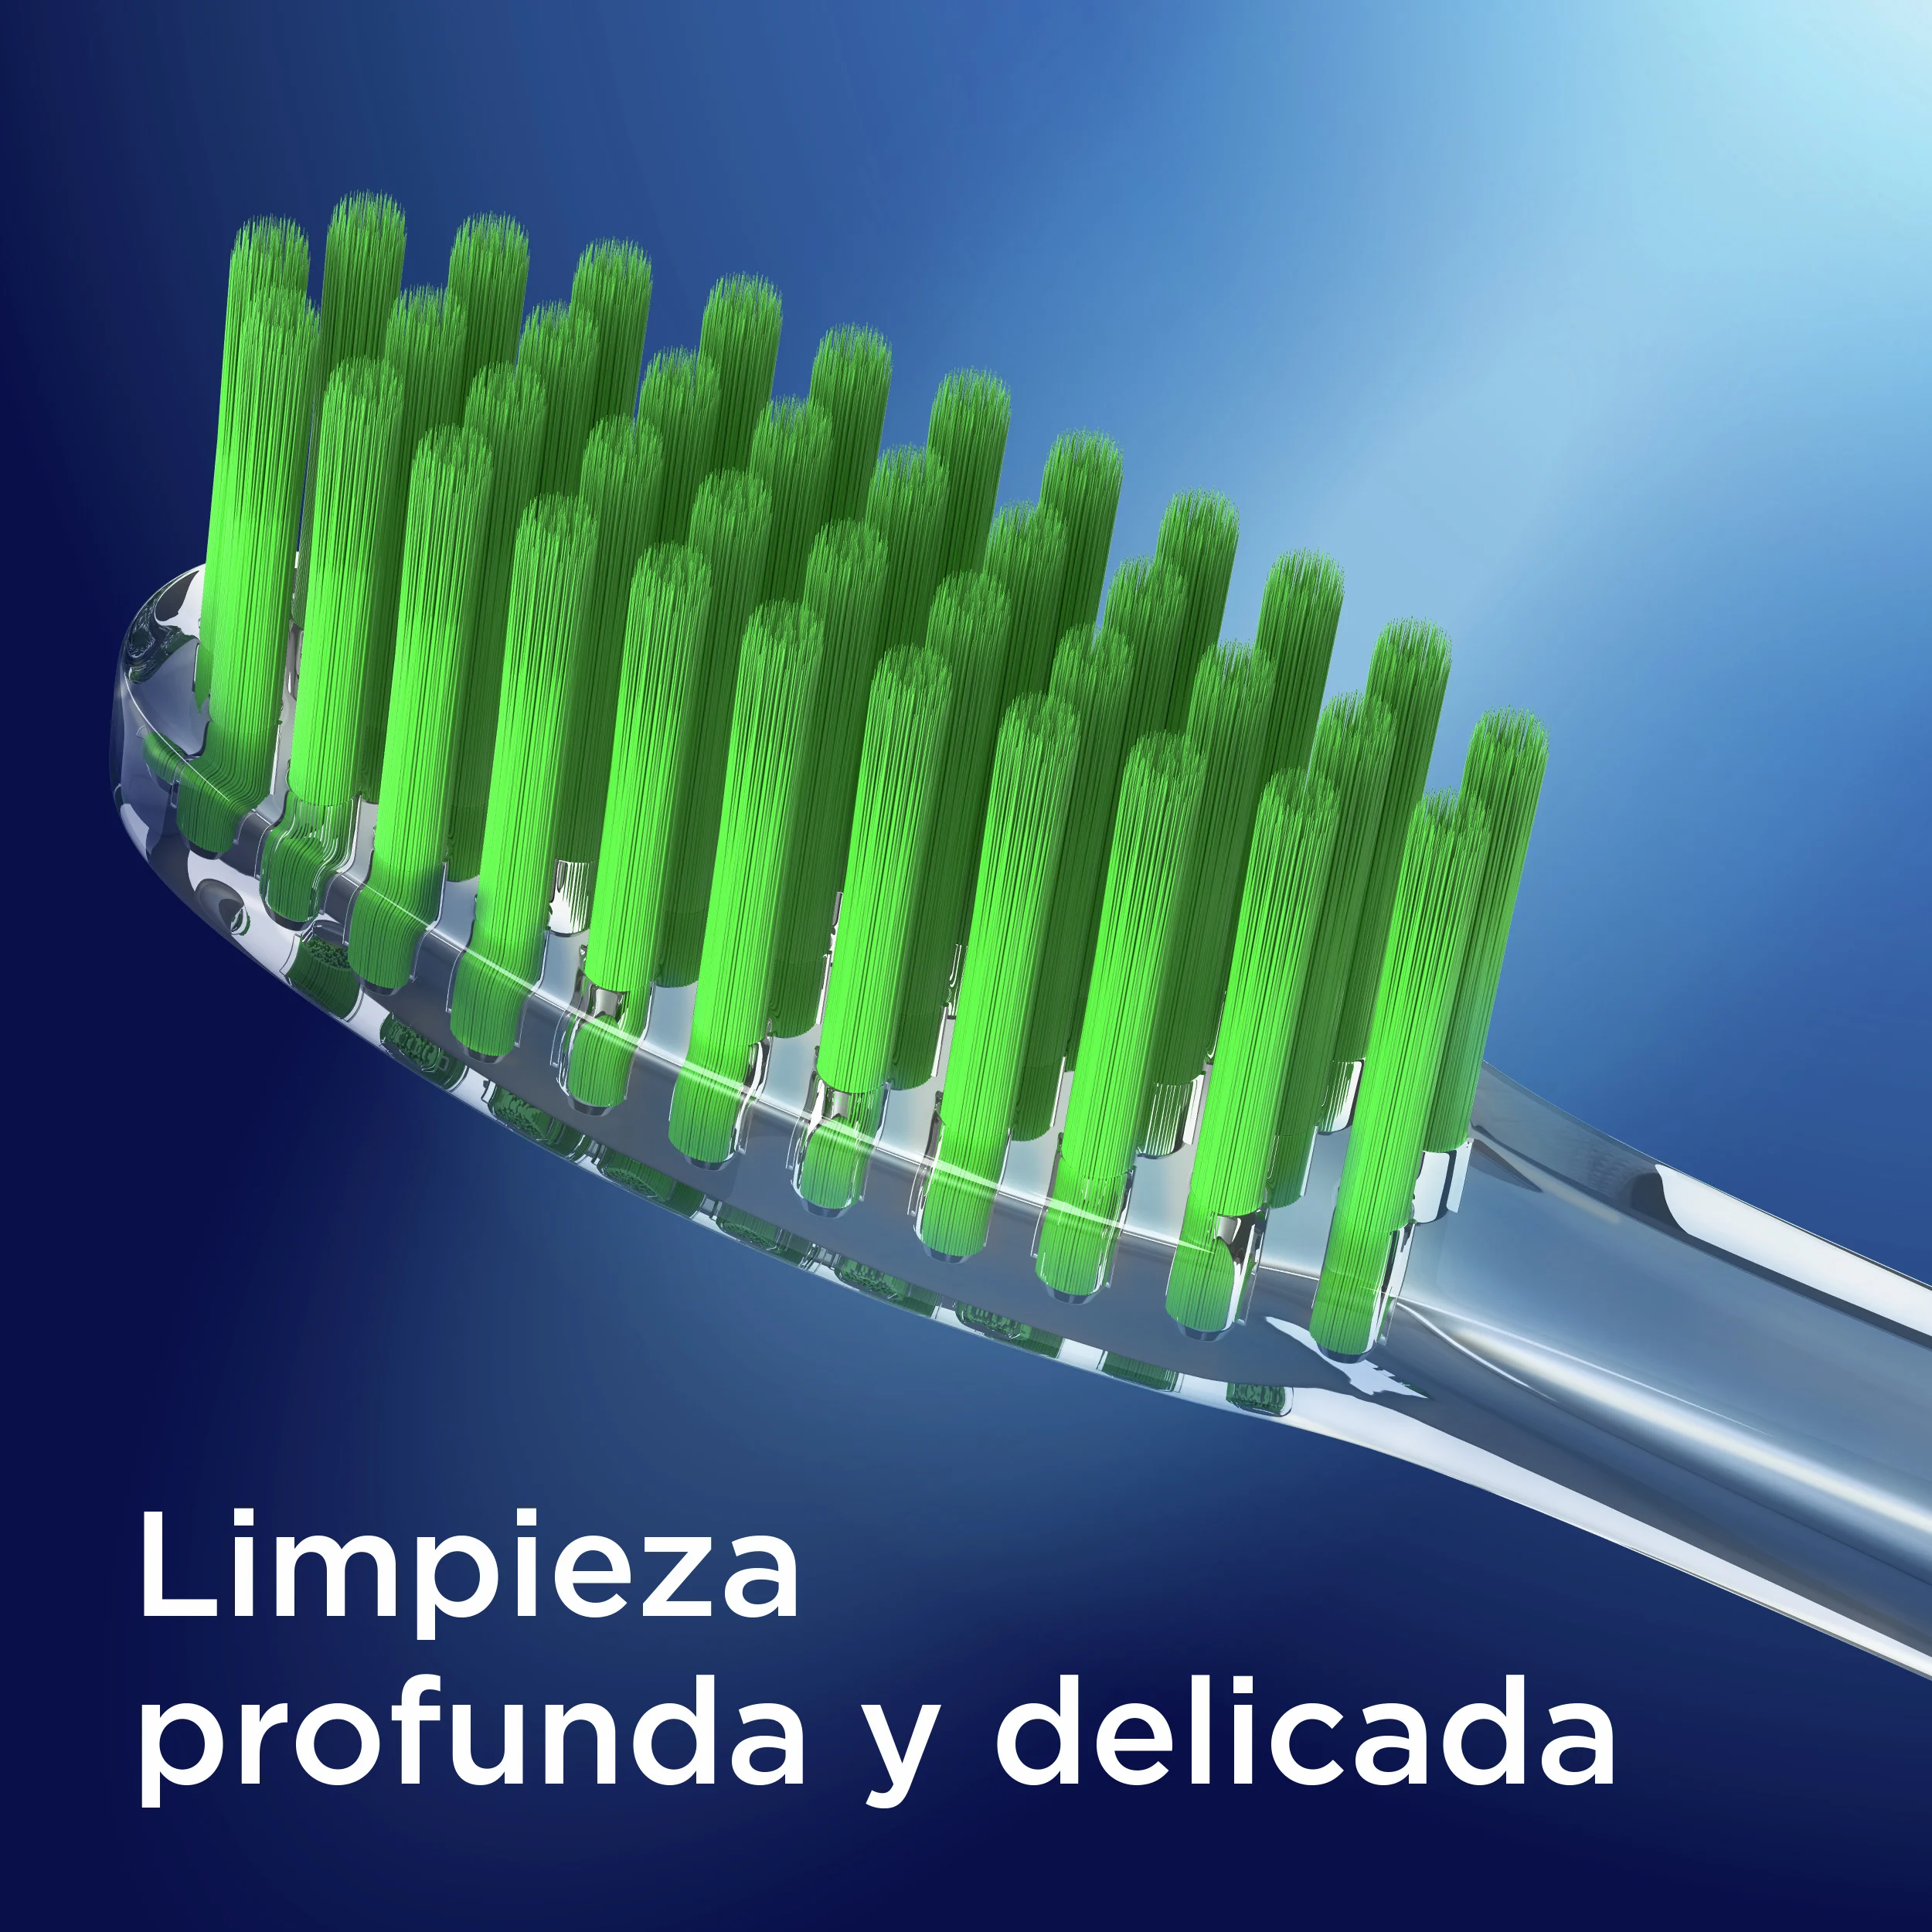 Cepillo de dientes Pro-Salud Ultrafino